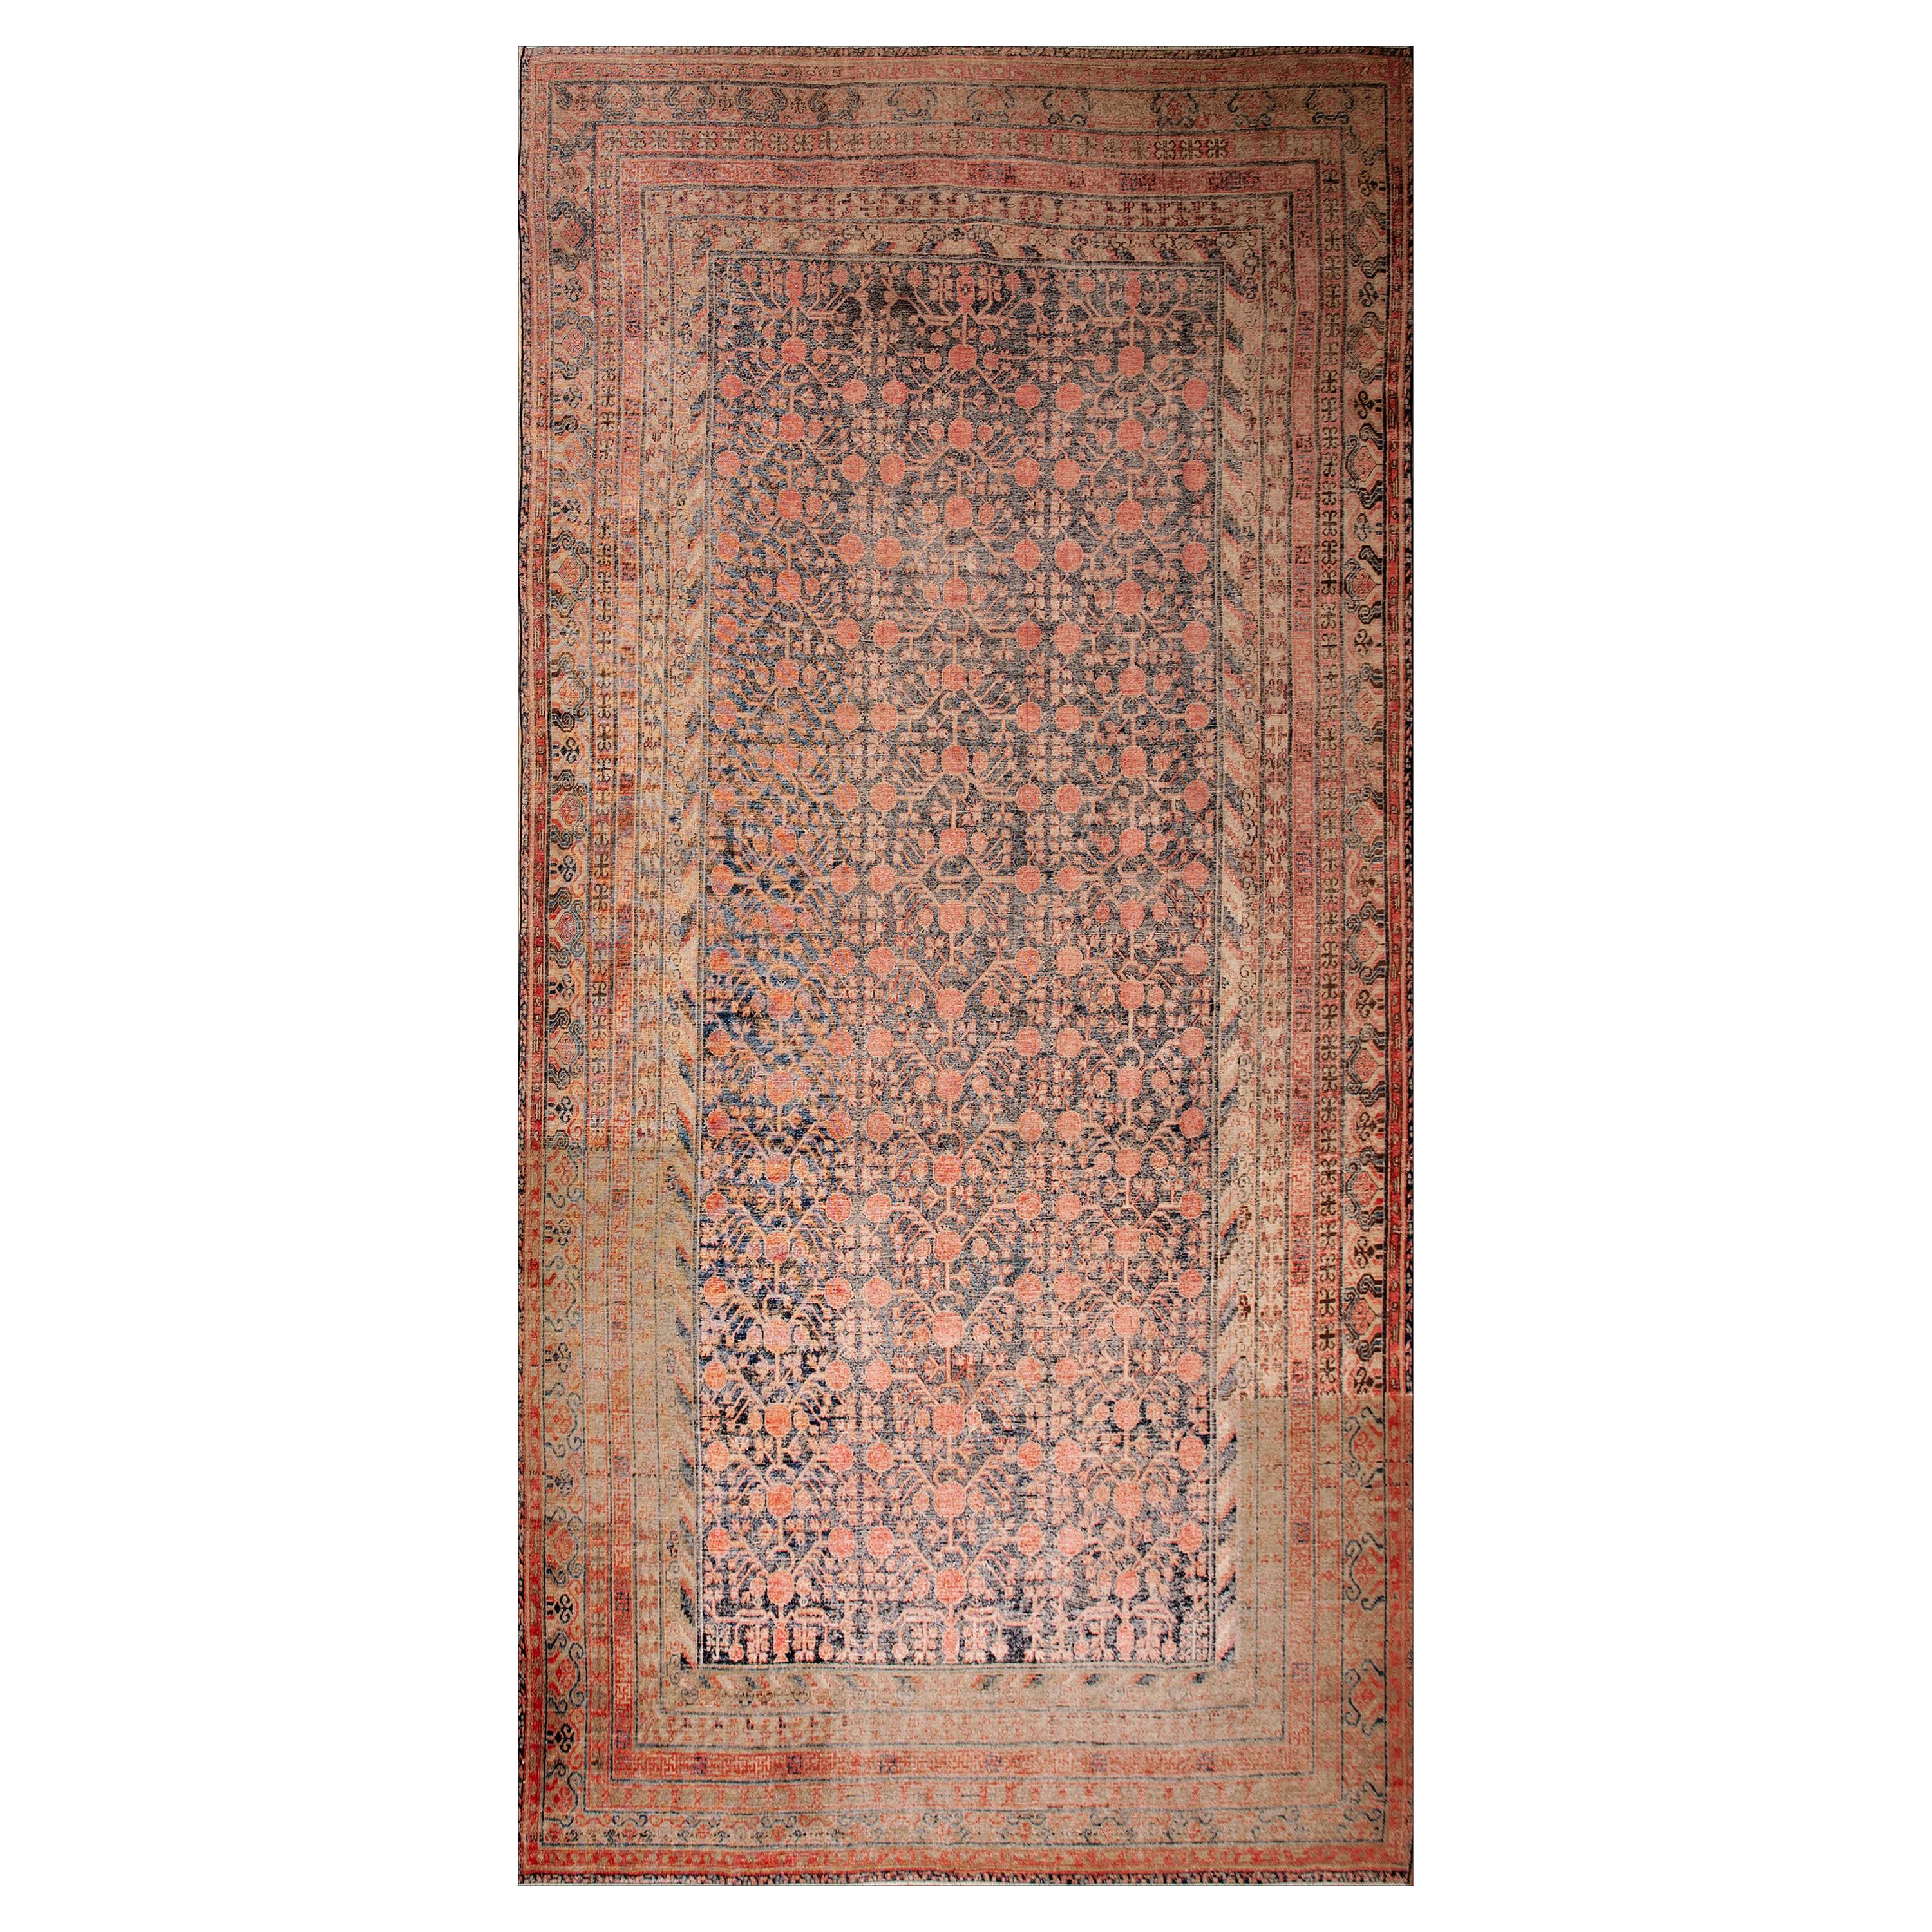 Early 20th Century Central Asian Khotan Carpet ( 9' x 17' 6" - 275 x 533 )